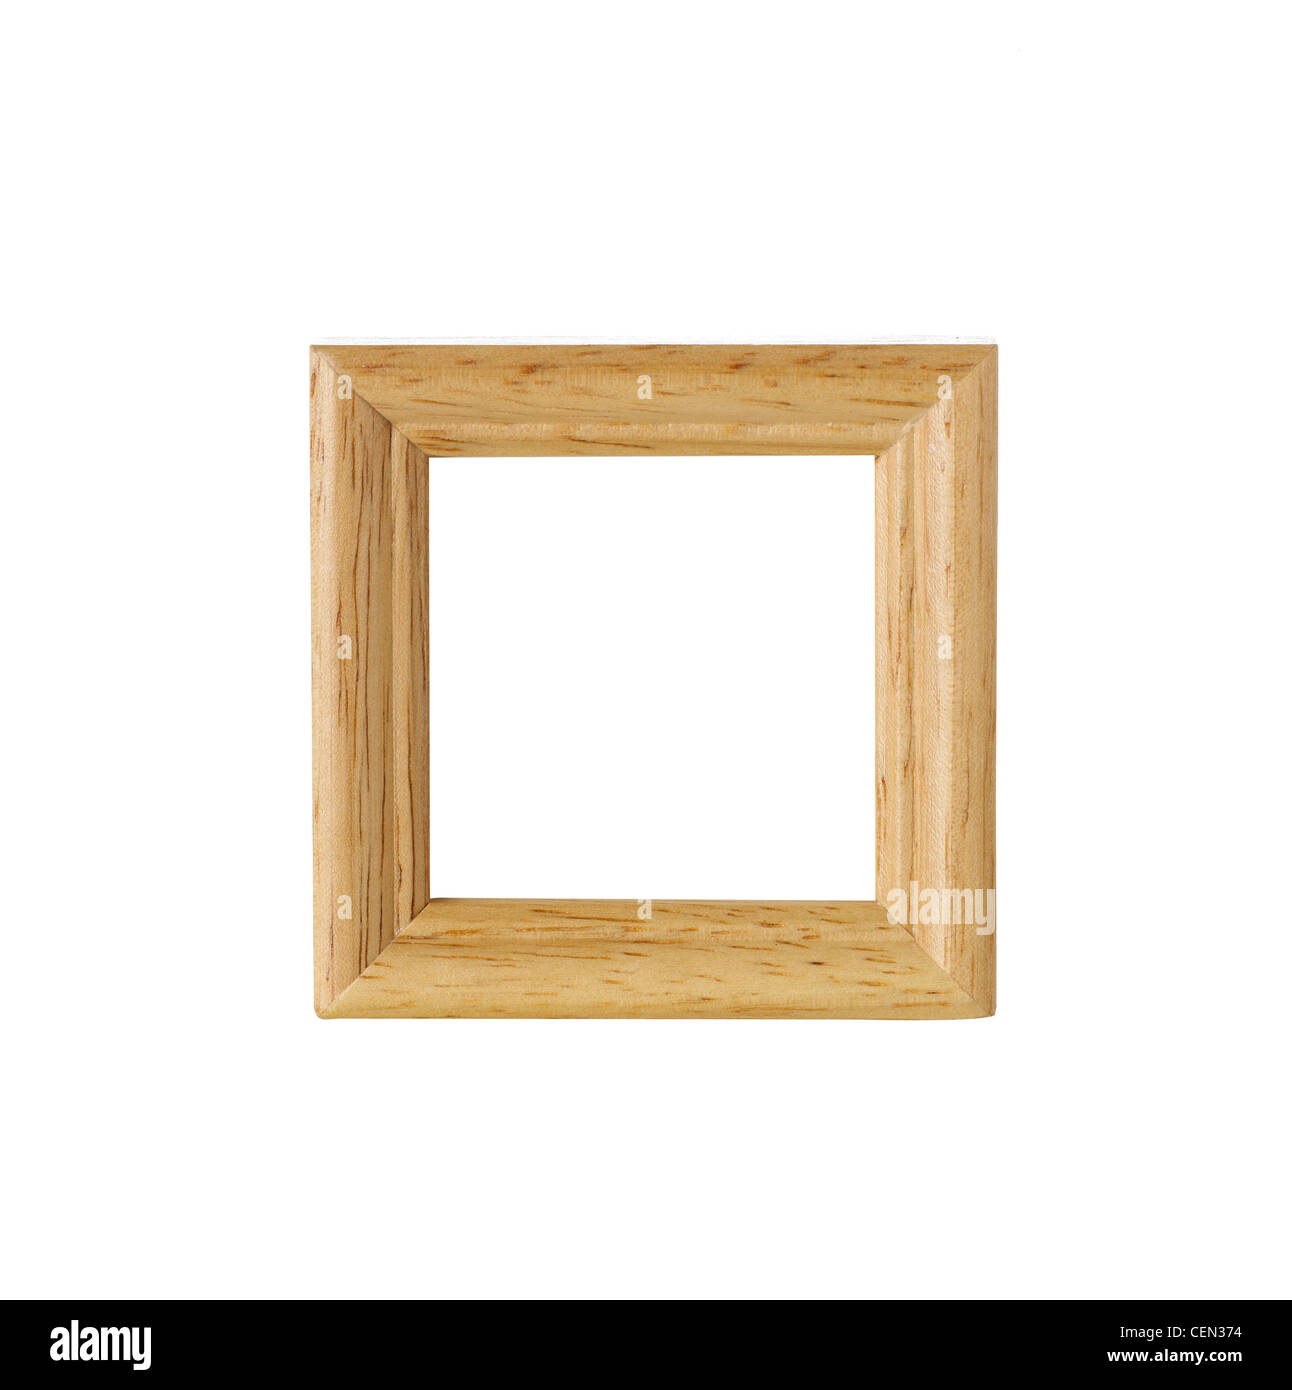 Wooden frame Stock Photo